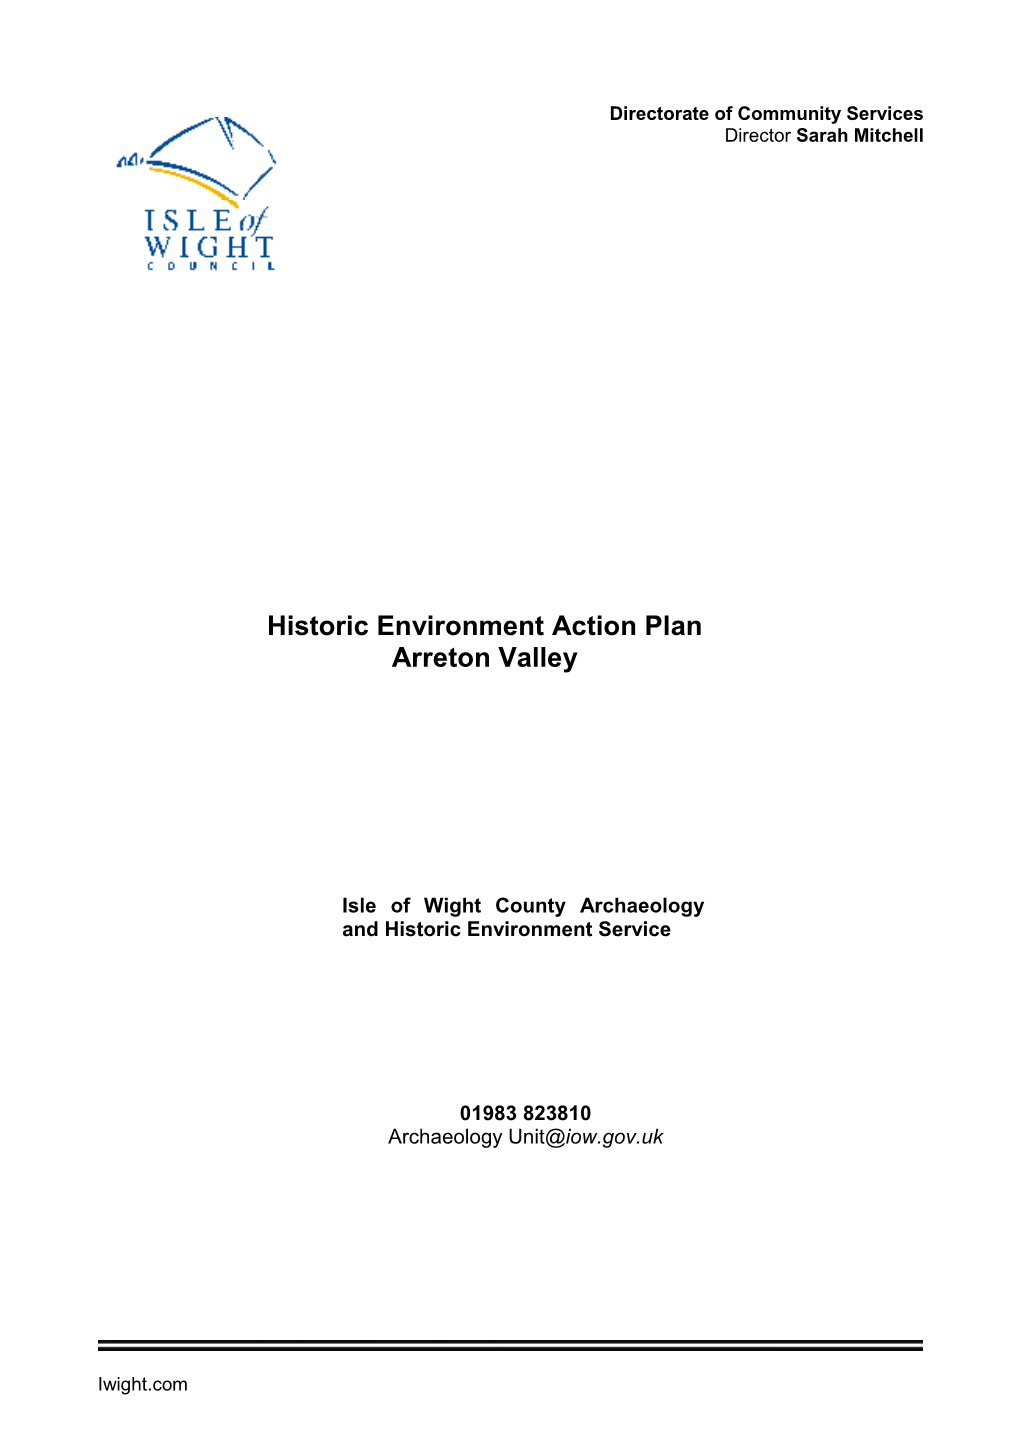 Historic Environment Action Plan Arreton Valley